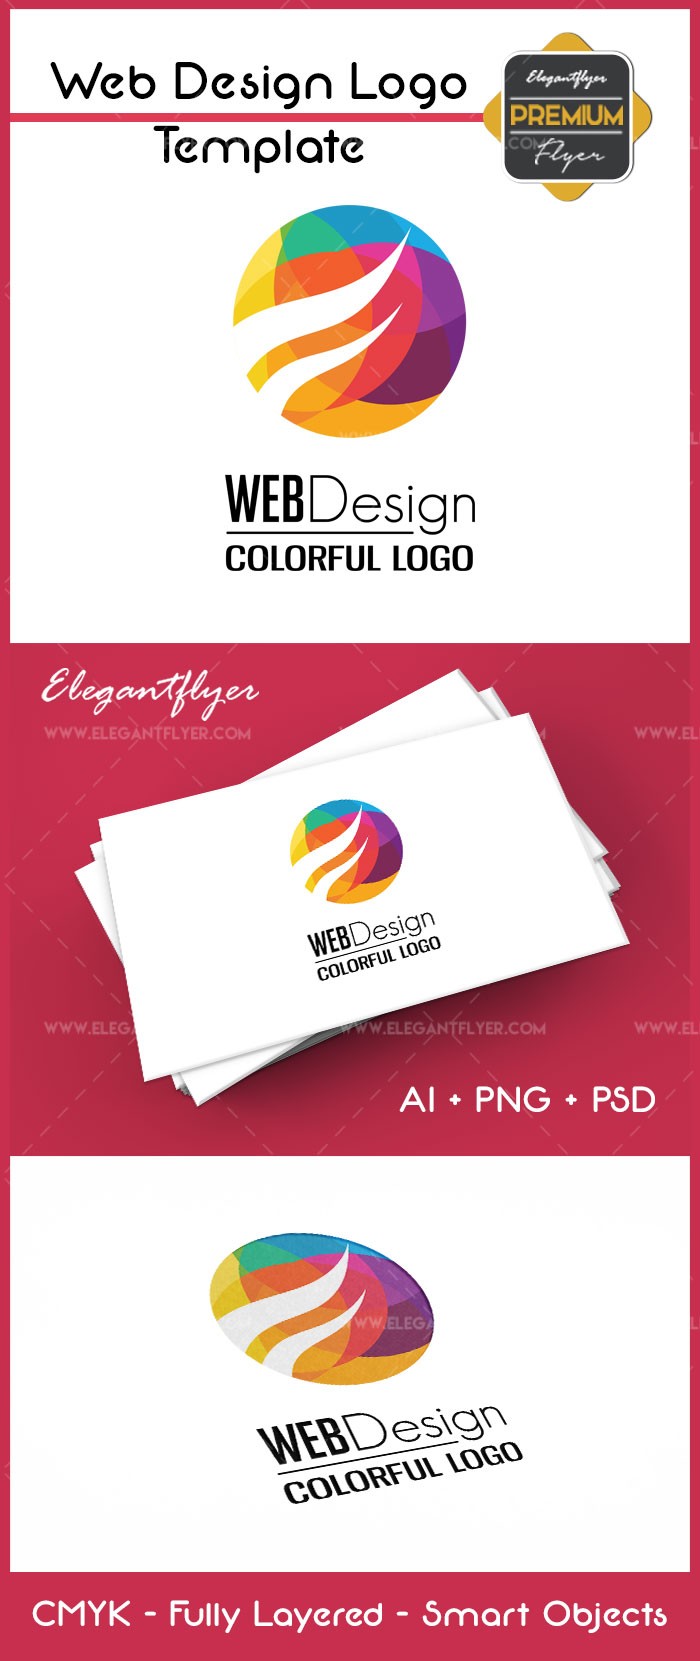 Webdesign by ElegantFlyer